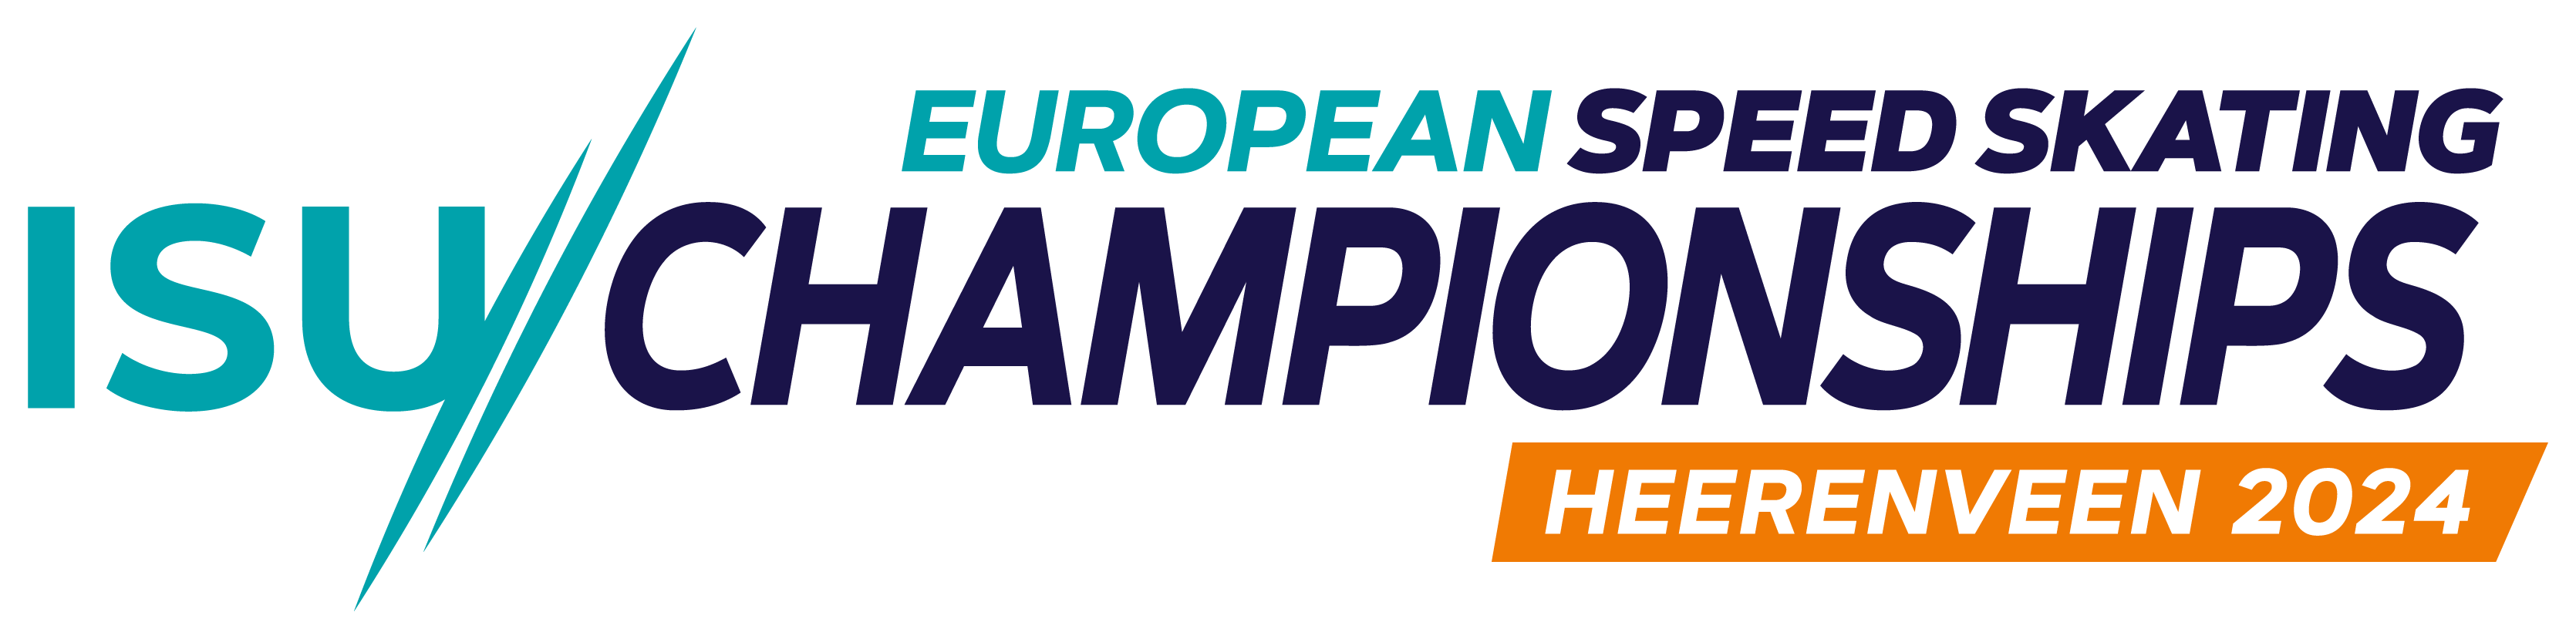 ISU European speed skating championship Heerenveen